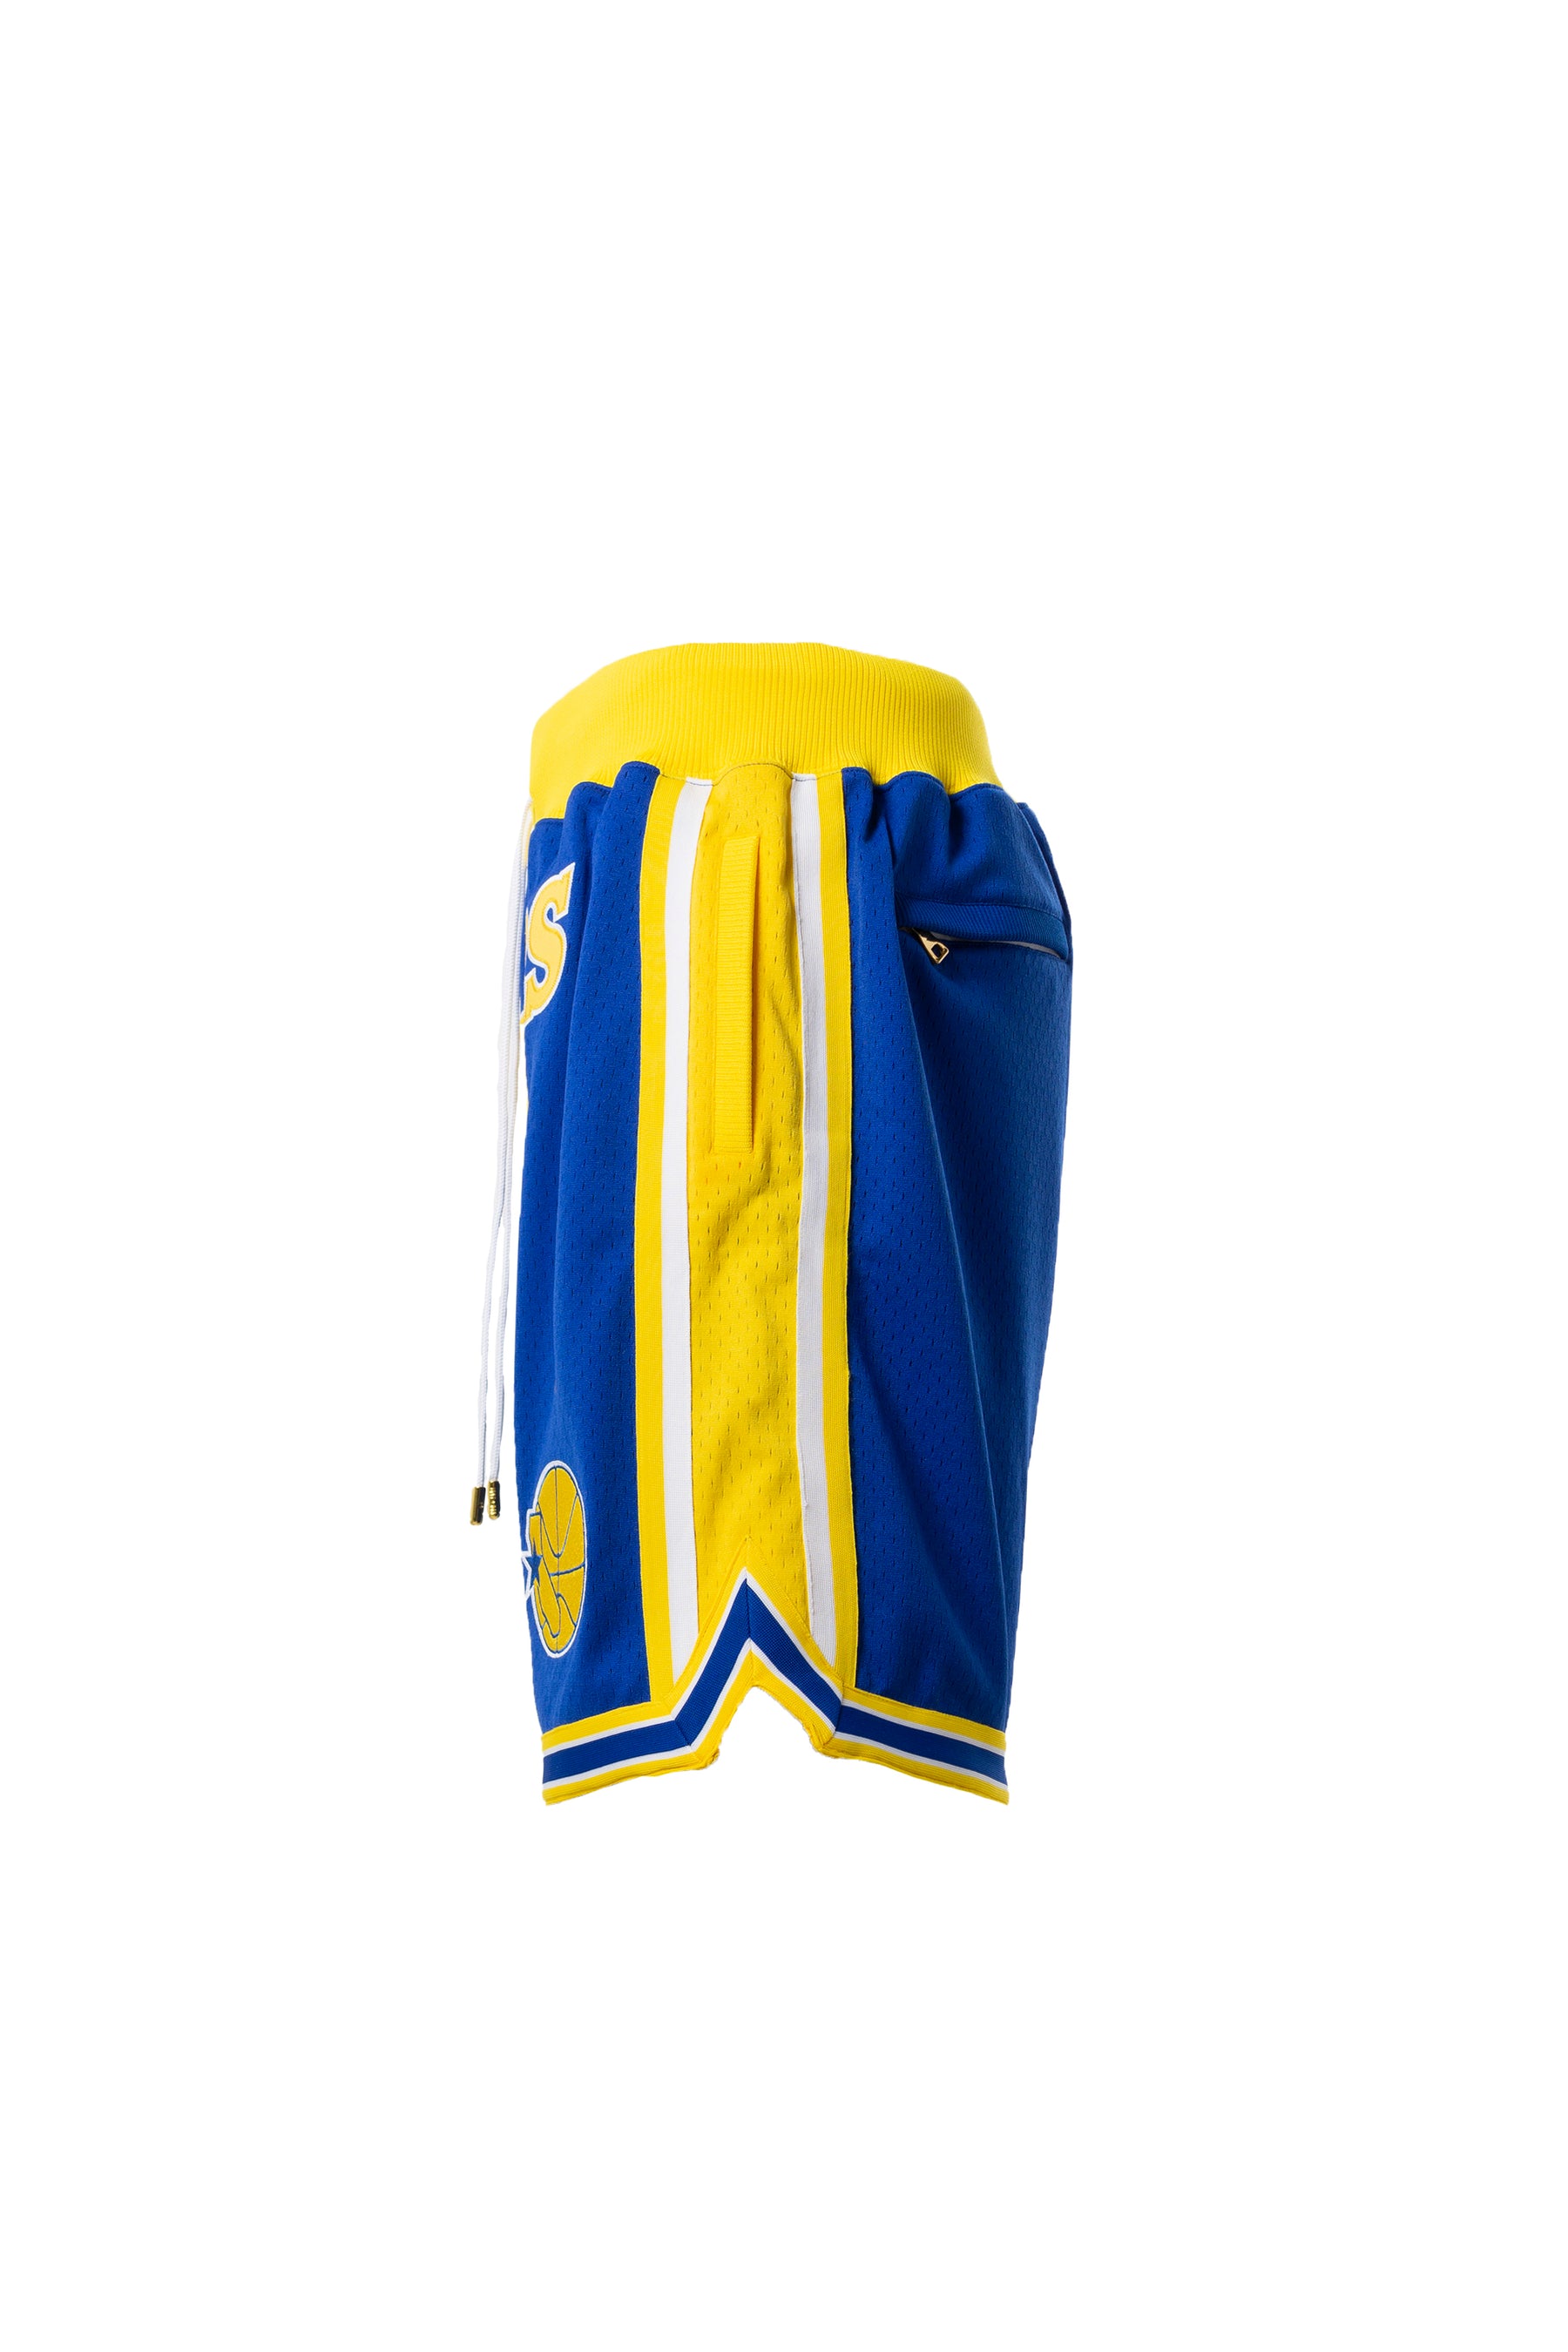 Warriors Basketball Just Don Shorts Yellow/blue All Sizes -  Denmark